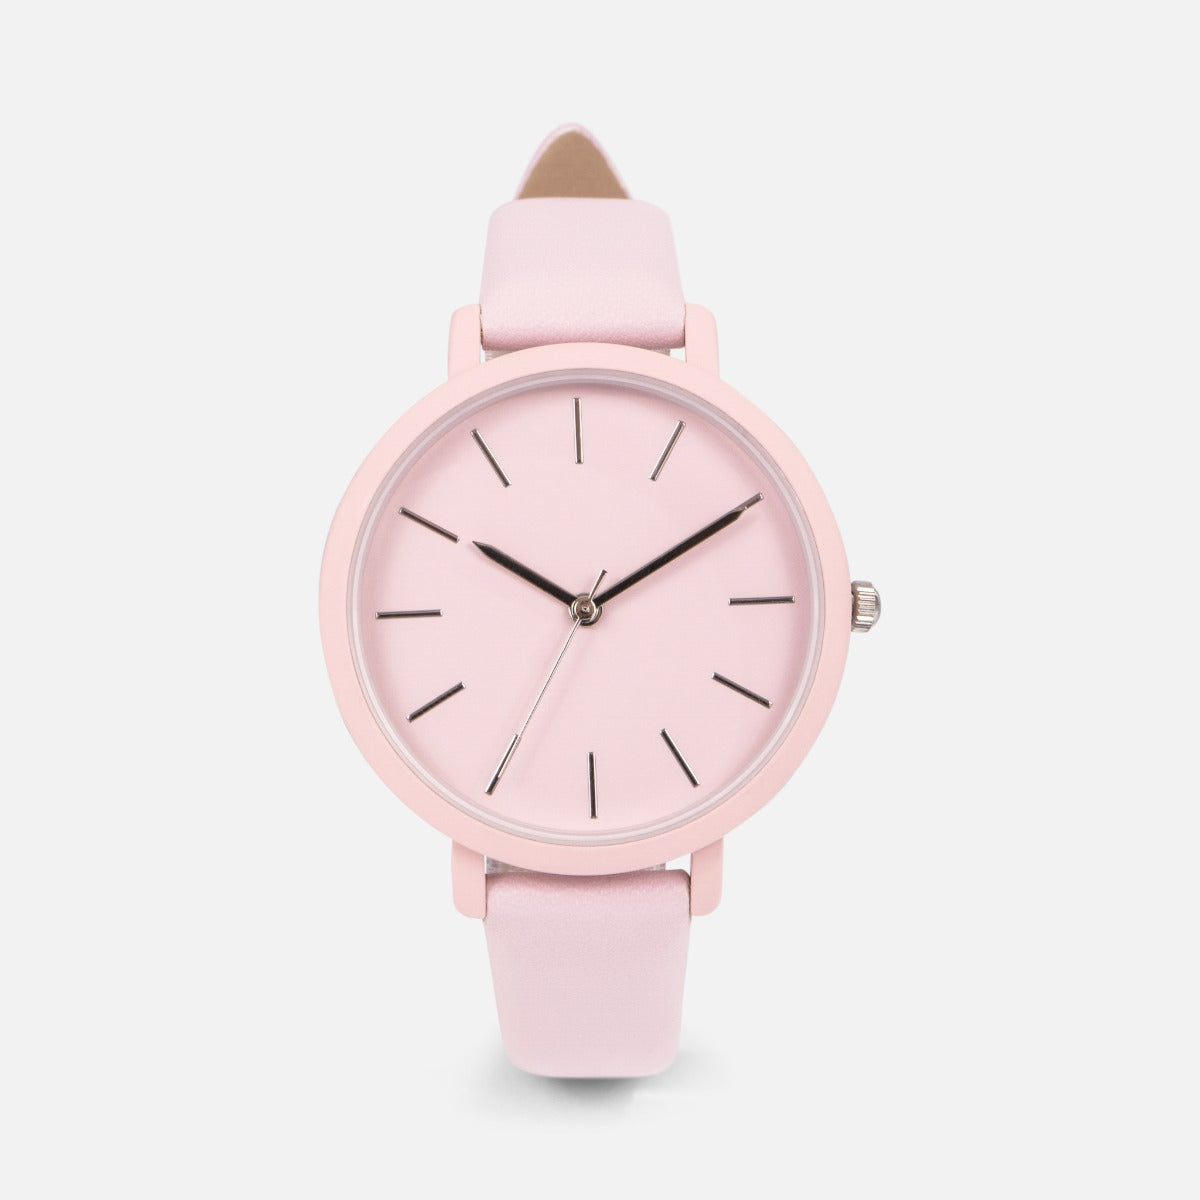 Collection innova - montre rose avec boîter mat